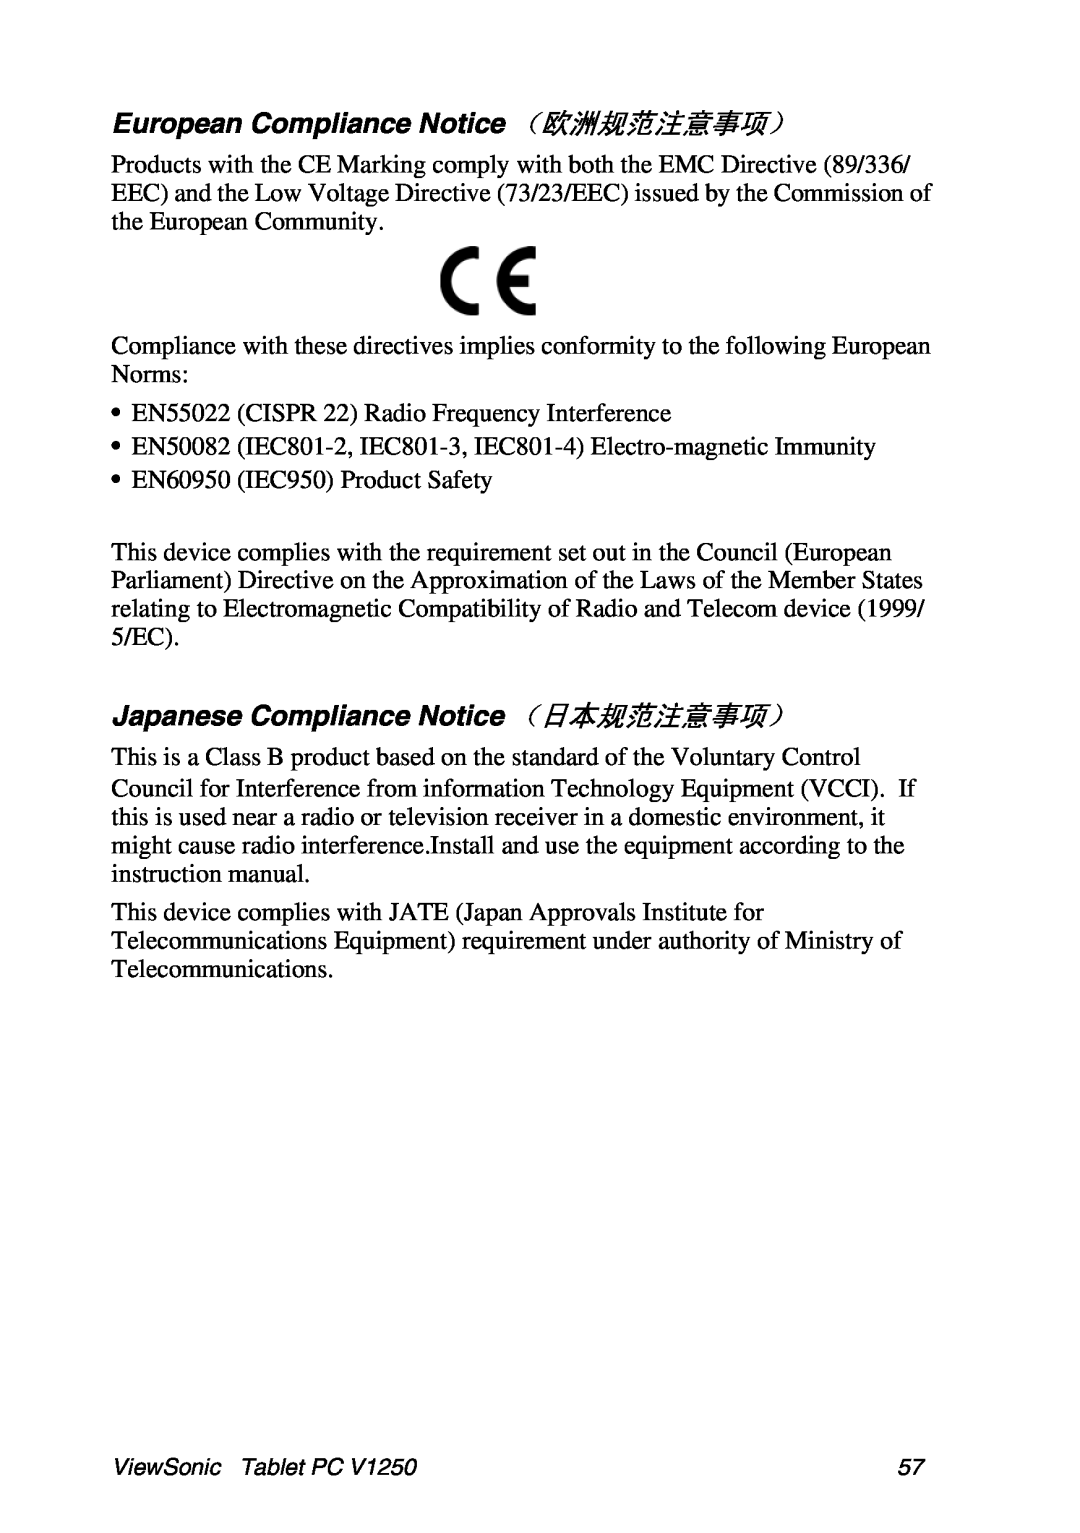 ViewSonic VSMW27922-1W manual European Compliance Notice, Japanese Compliance Notice 